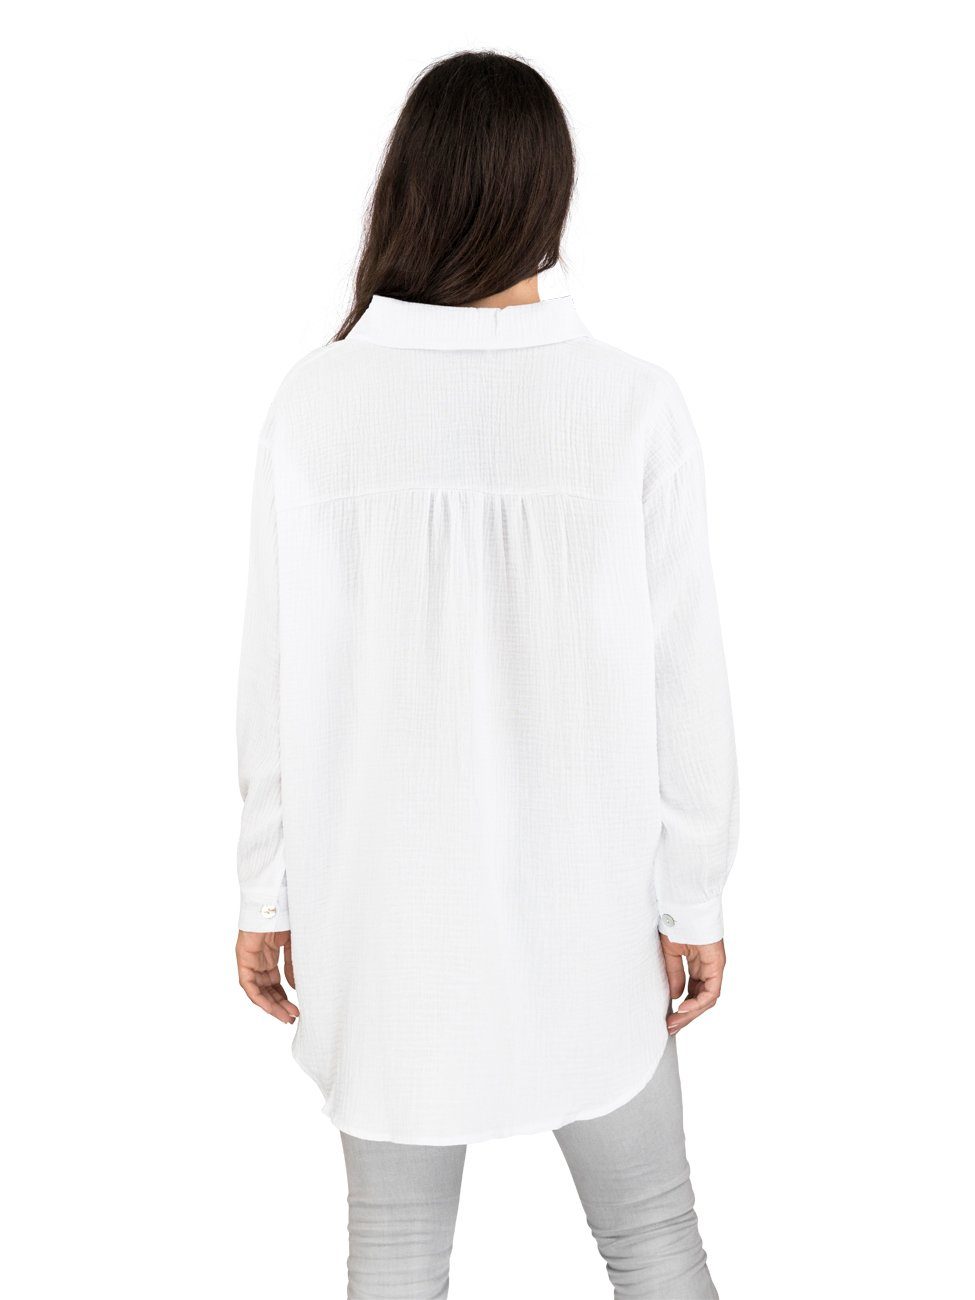 DENIMFY Hemdbluse Damen 100% White (6200) Musselin Oversize Bluse Baumwolle Basic Fit aus Hemd DFMathilda